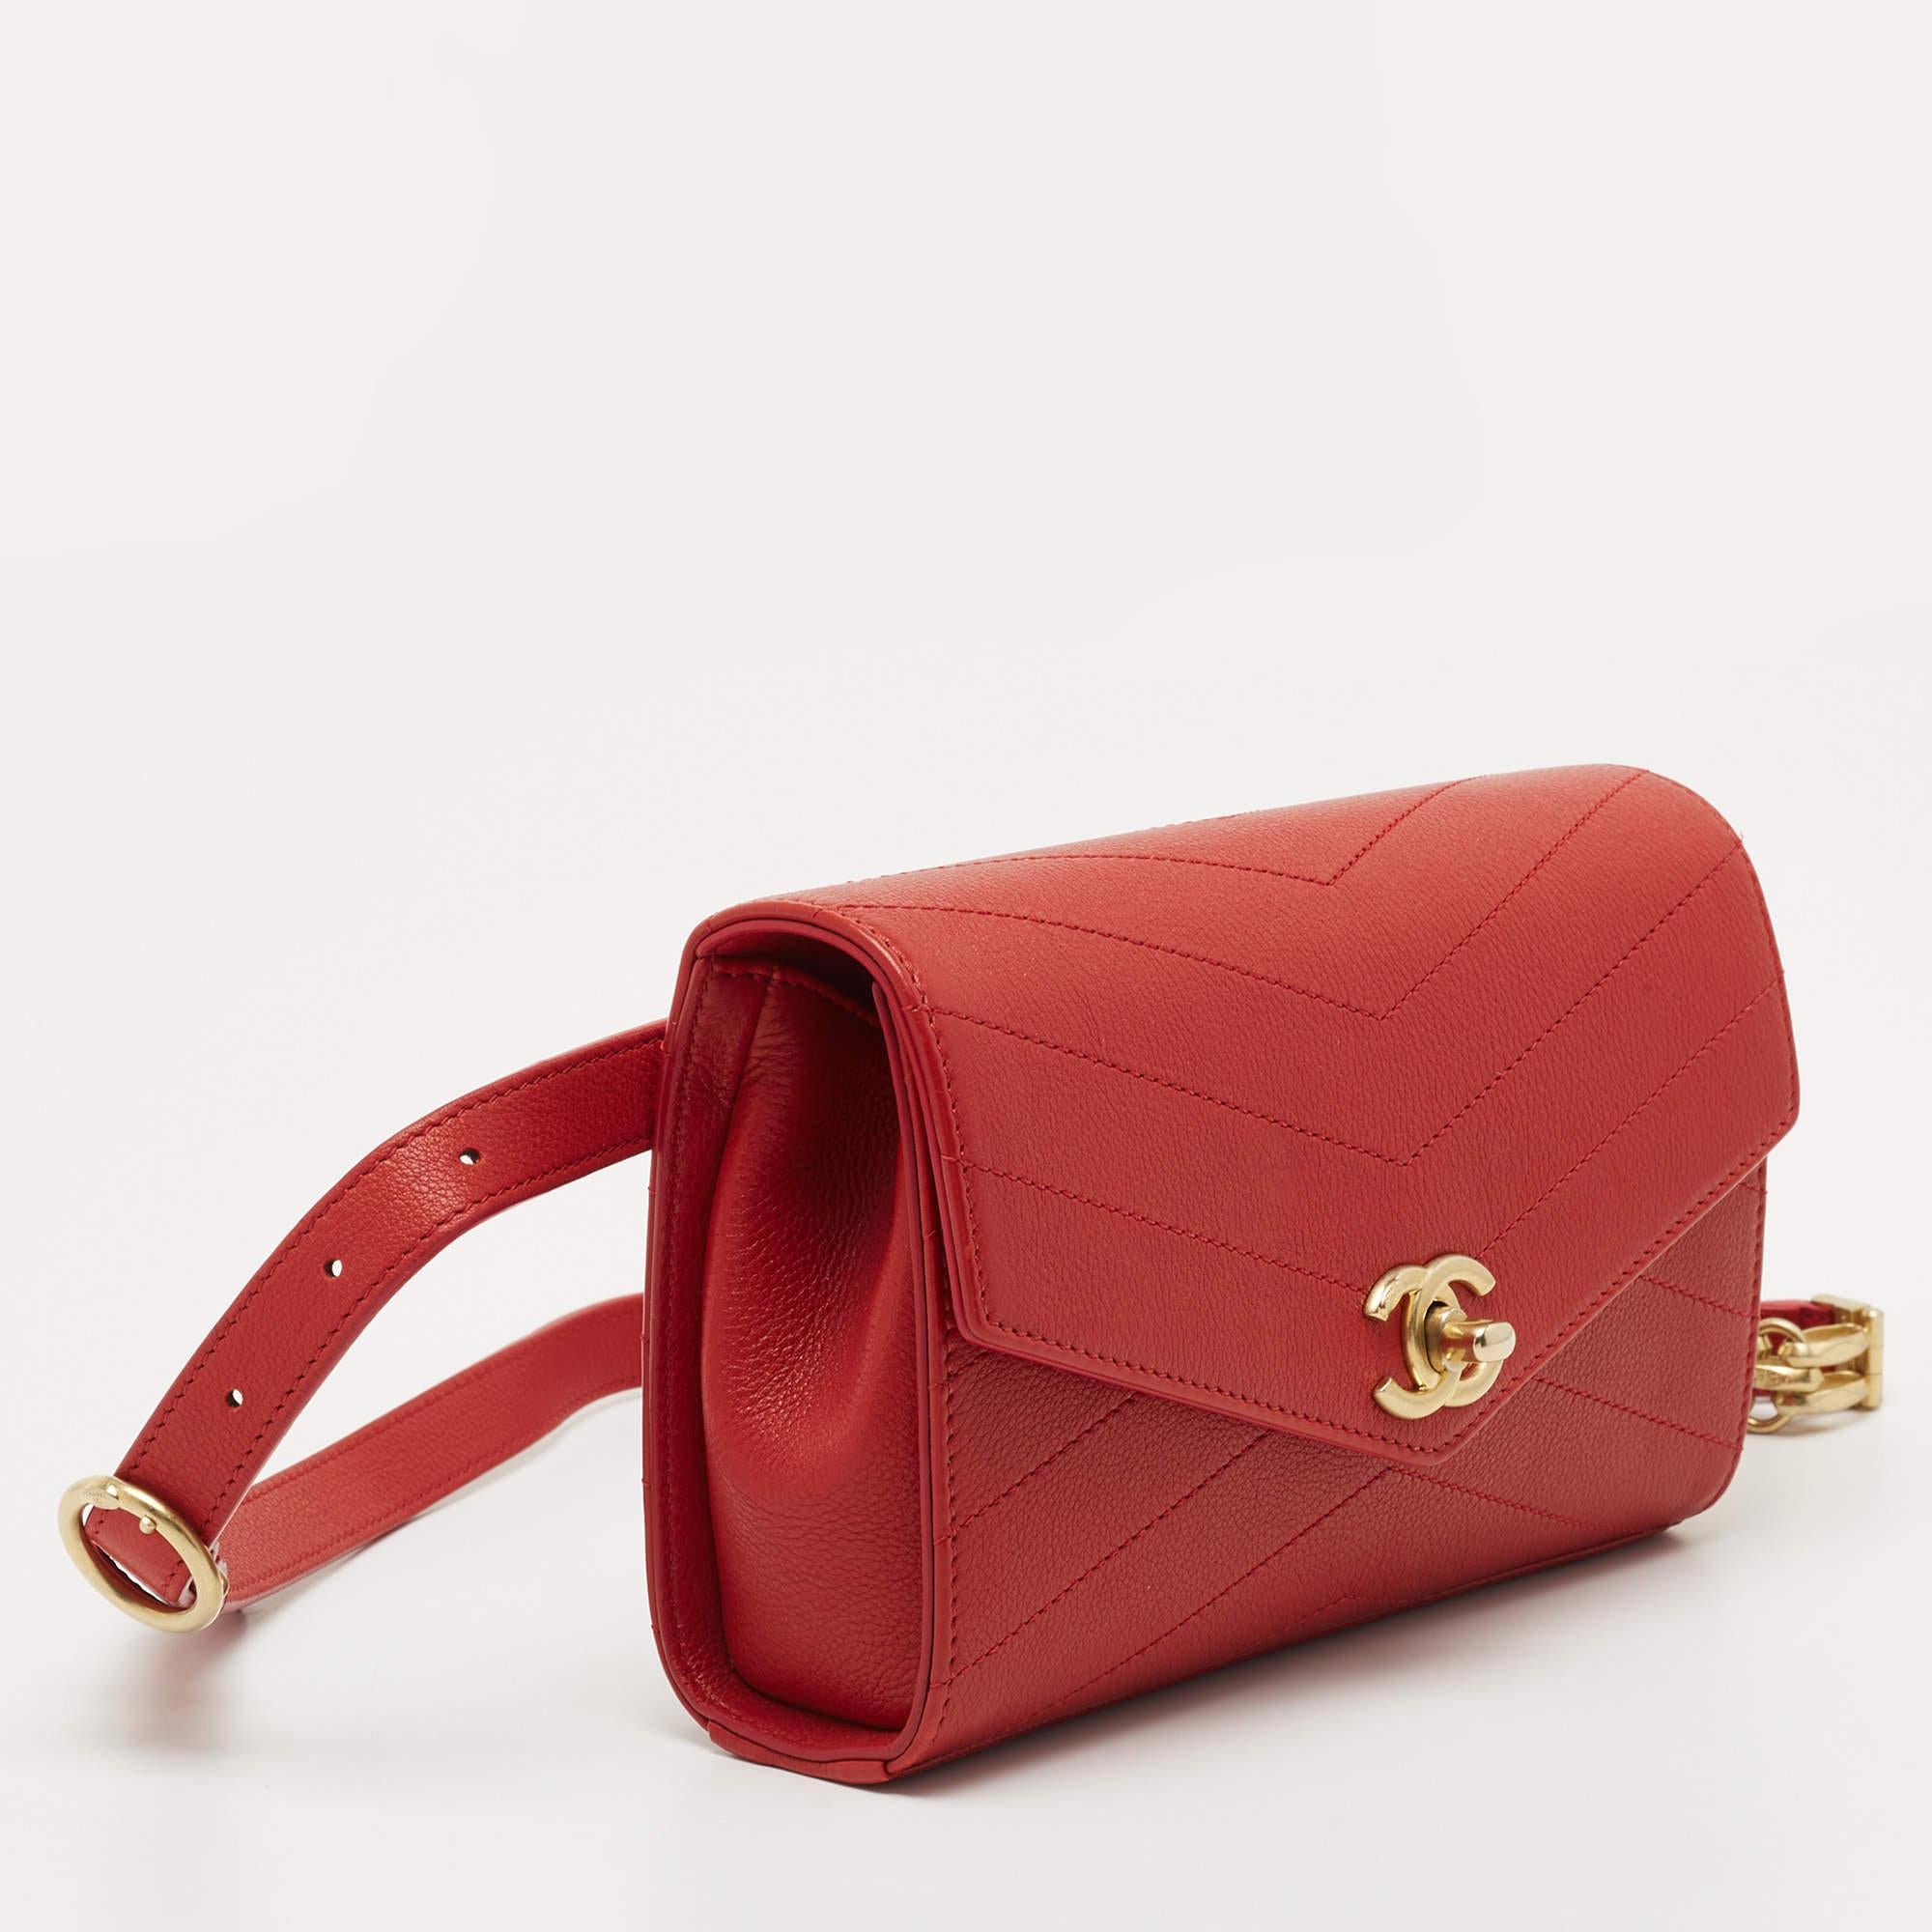 Chanel Red Chevron Leather Coco Waist Belt Bag 1